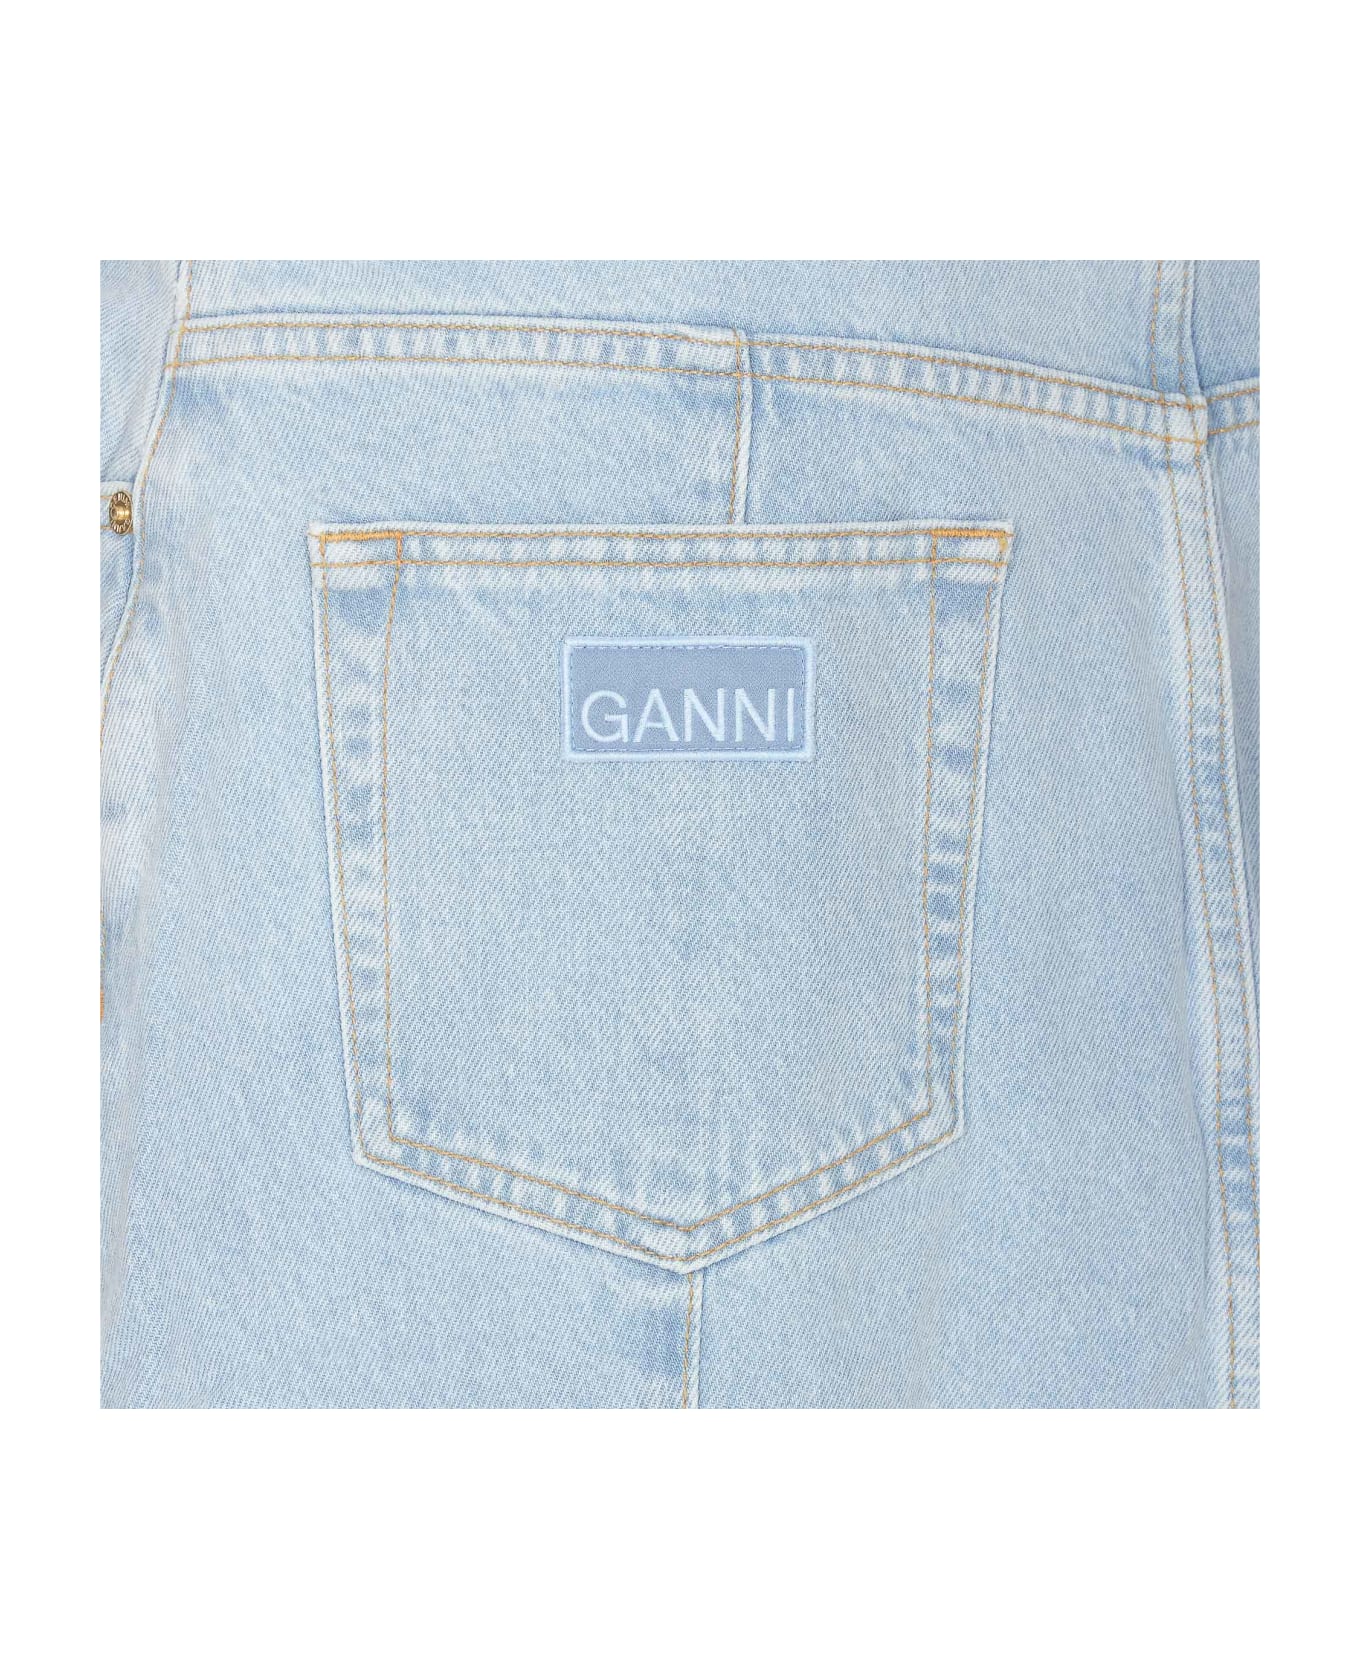 Ganni Denim Midi Skirt - Stone Washed